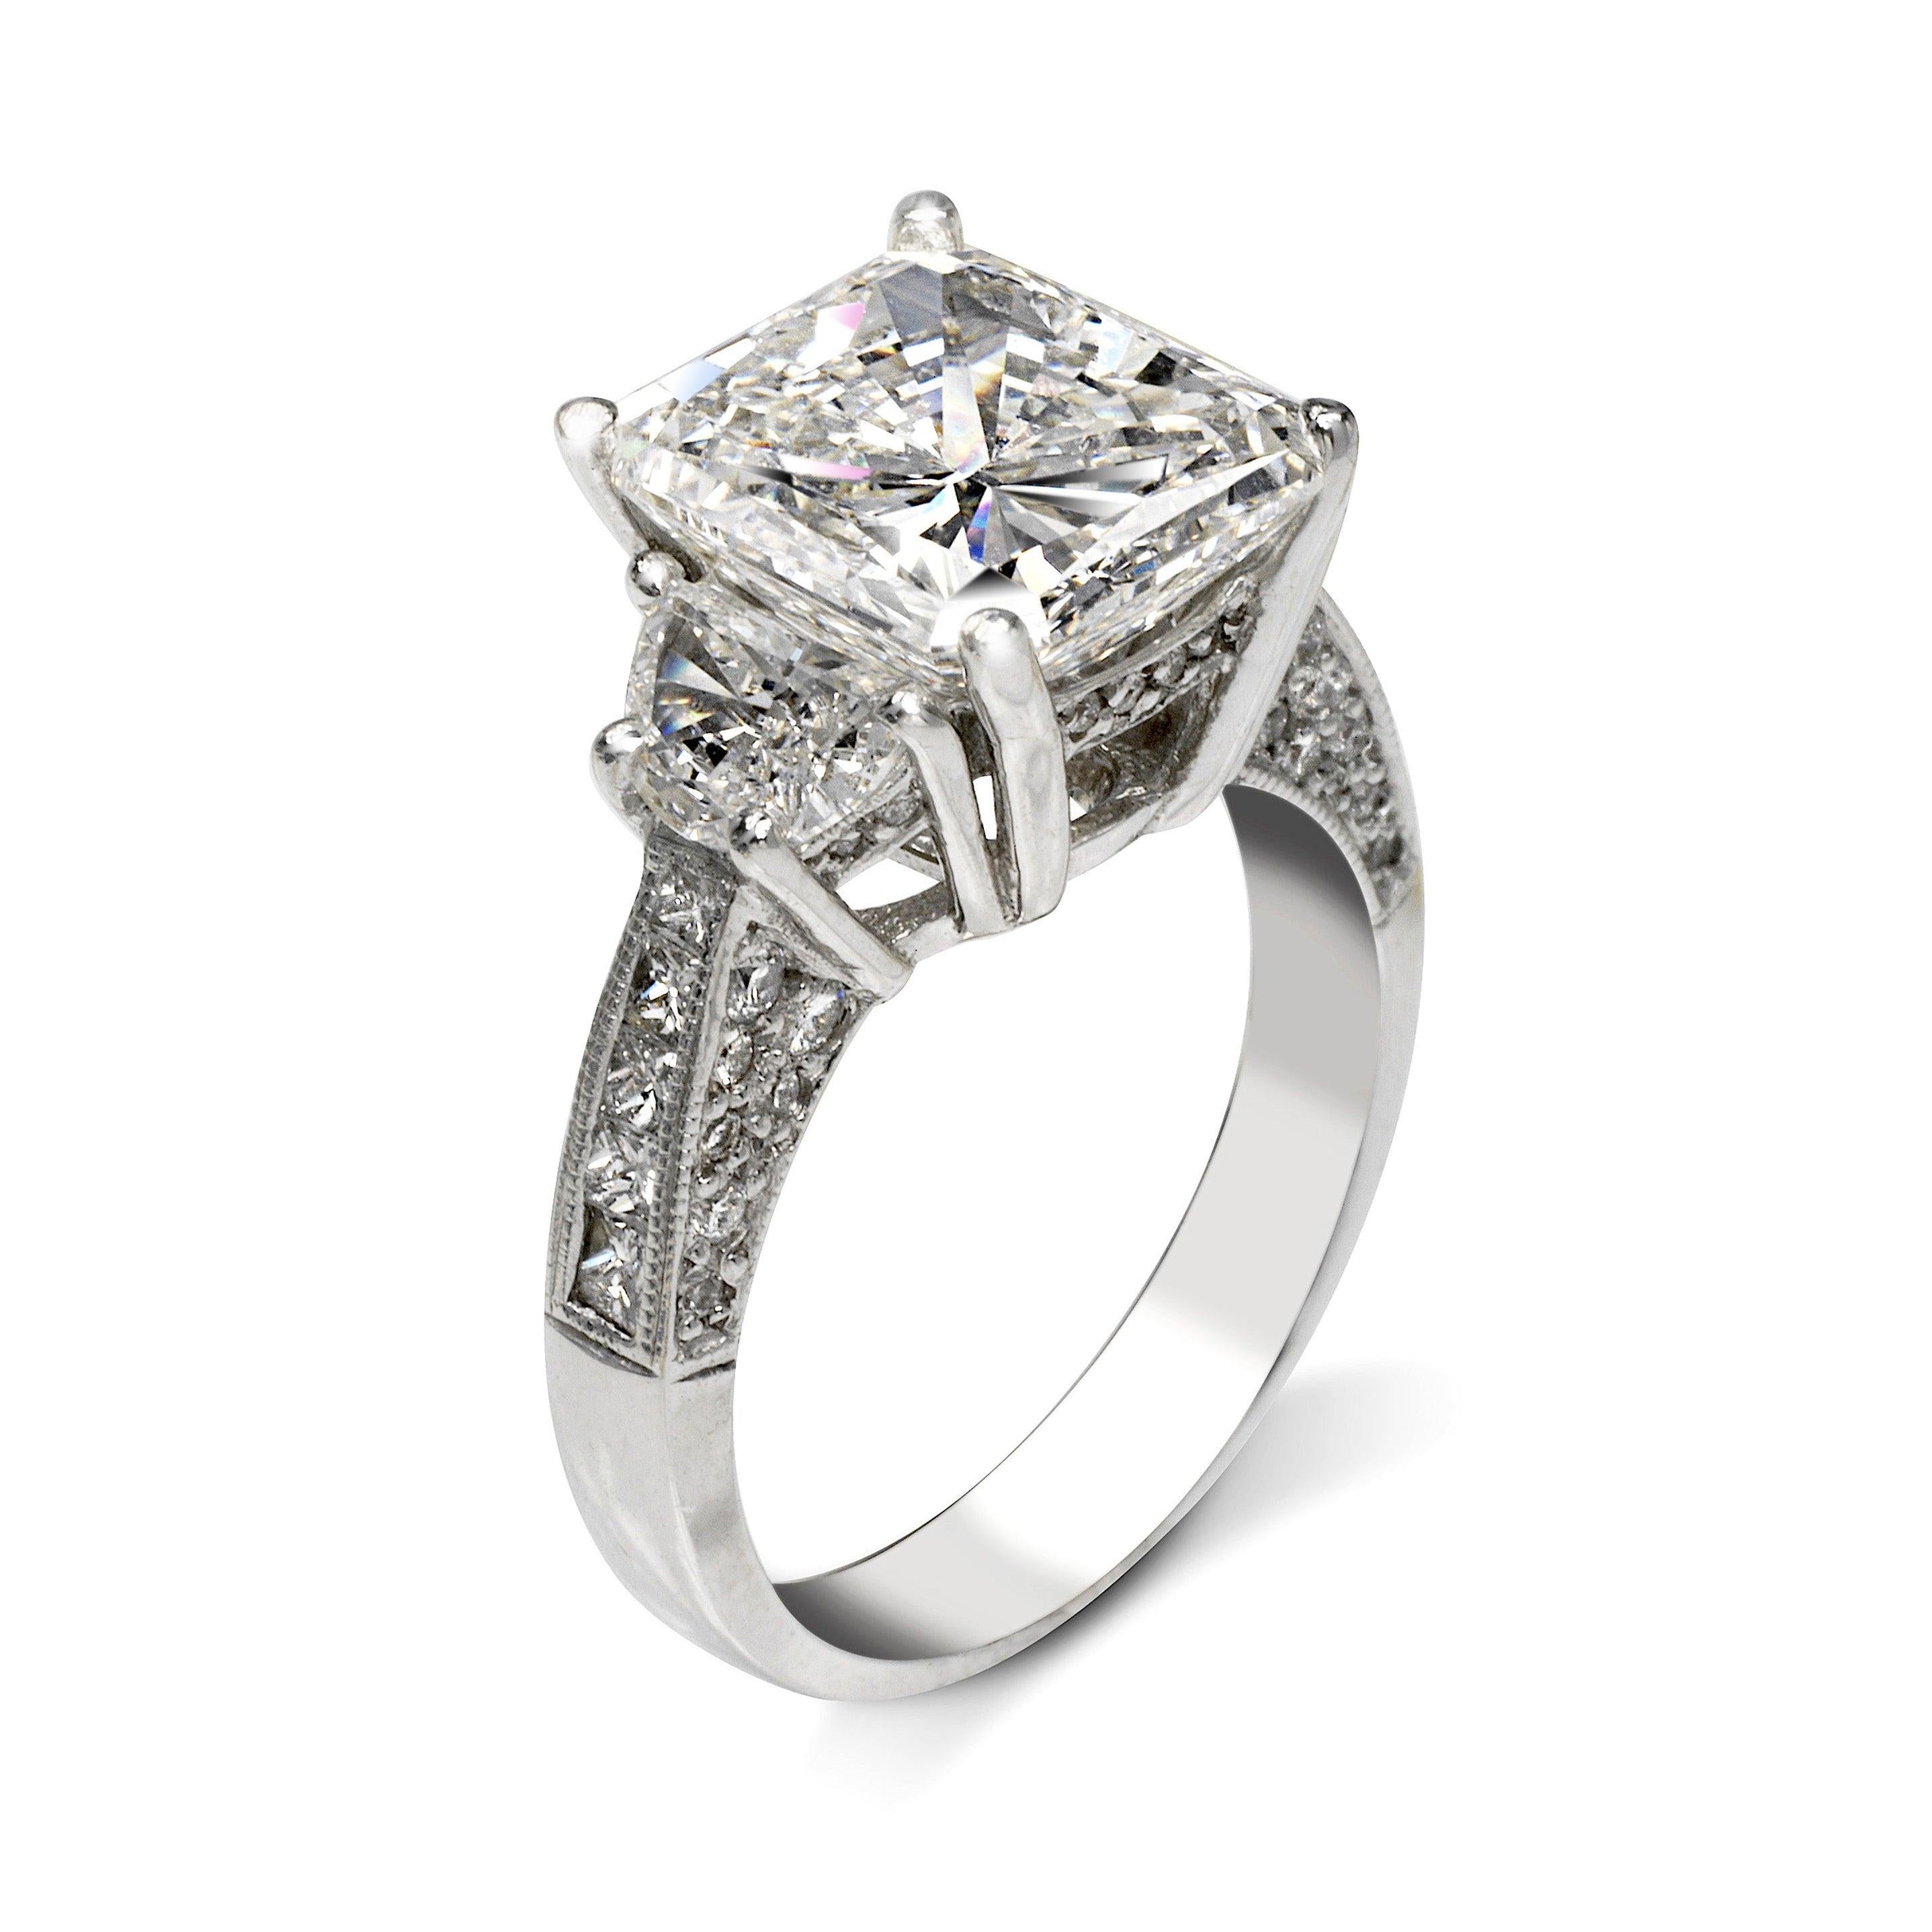 7ct radiant cut diamond ring